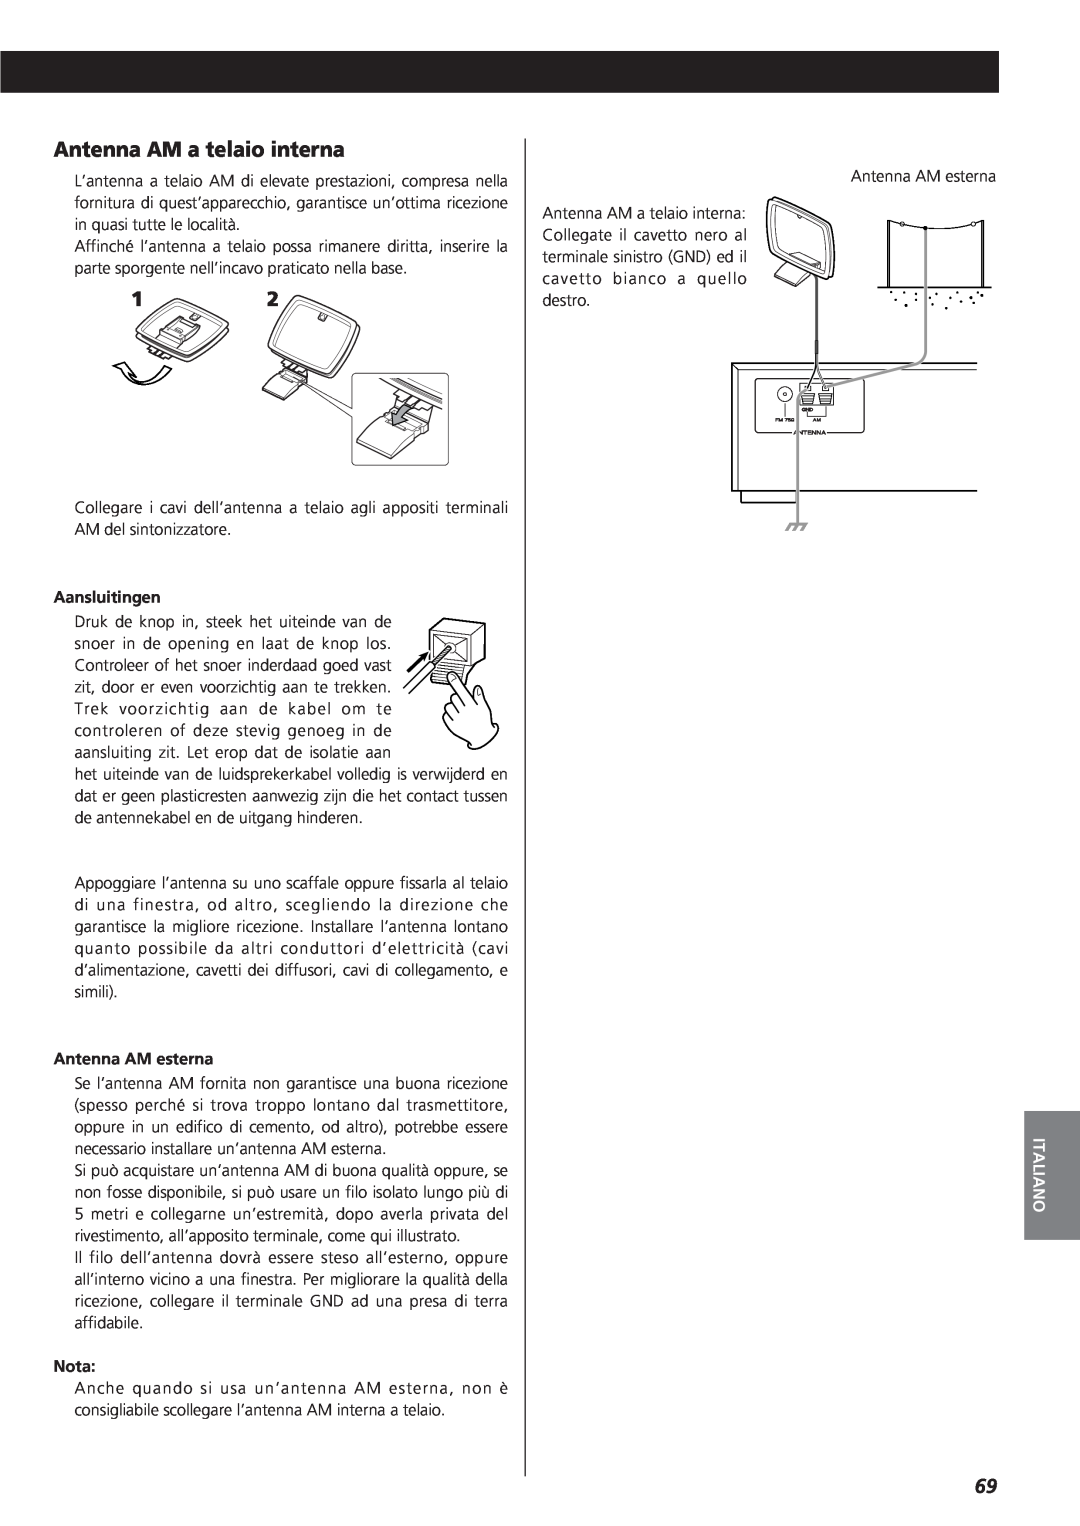 Teac AG-790 owner manual Antenna AM a telaio interna, Aansluitingen, Antenna AM esterna, Nota, Italiano 